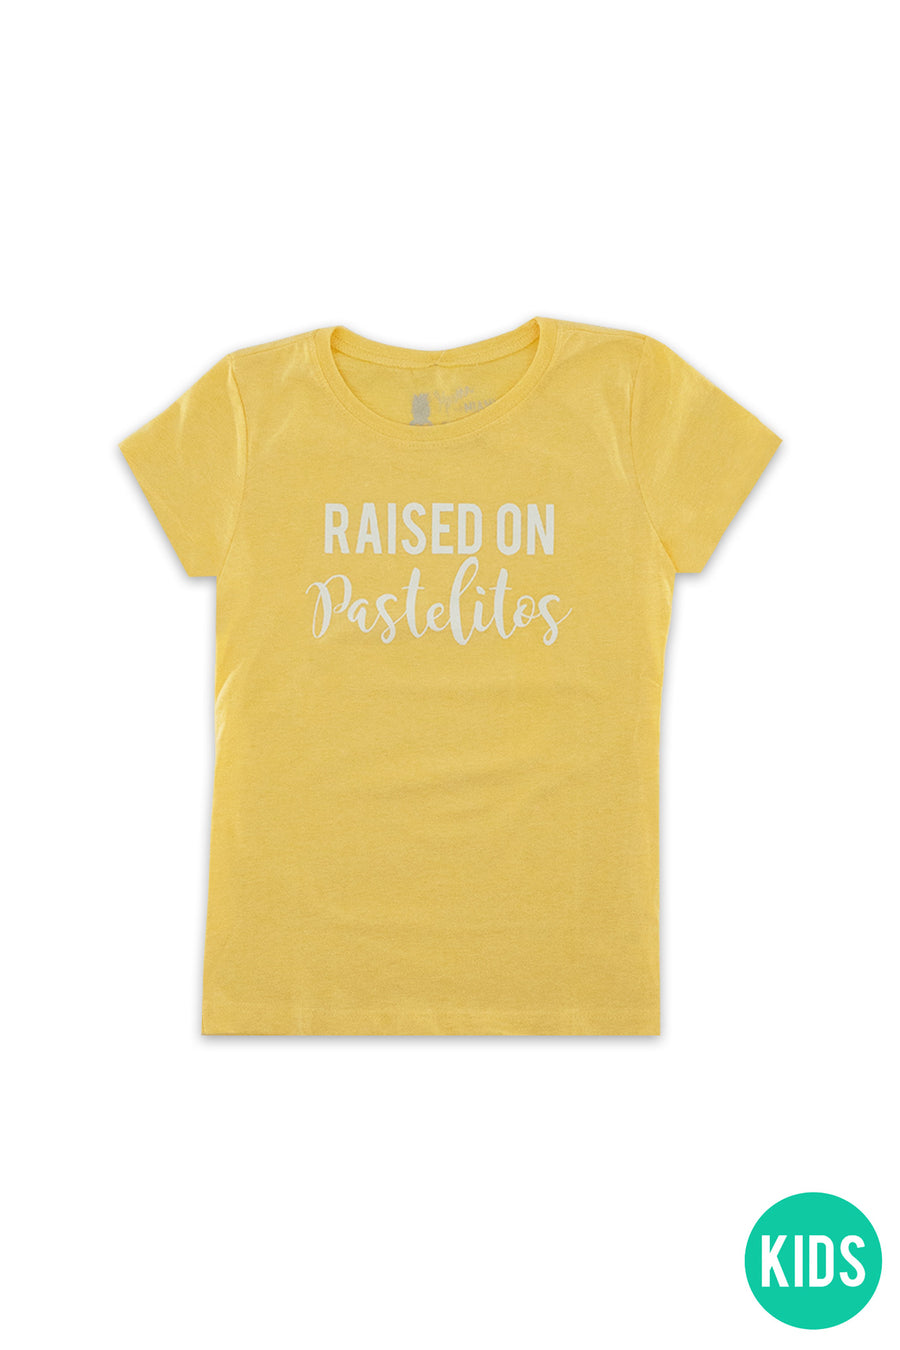 Raised on Pastelitos T-Shirt - Girls